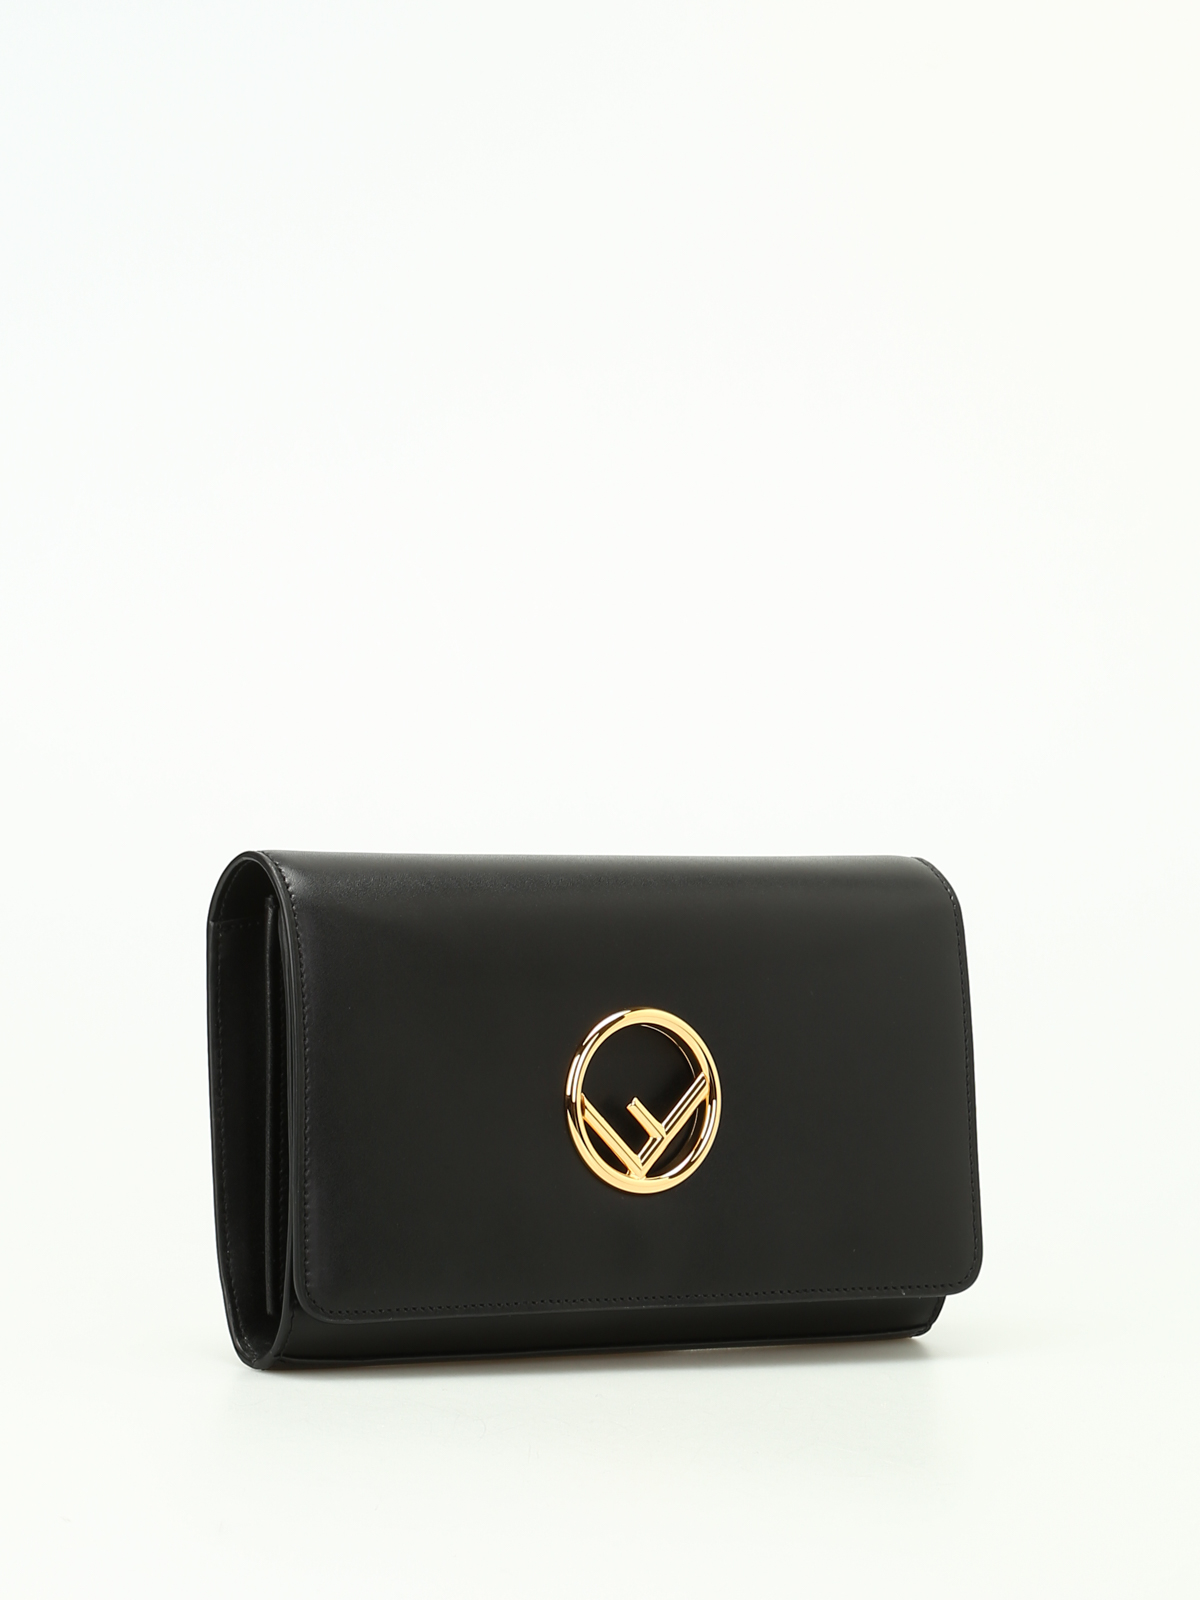 Fendi - Golden F black leather clutch 